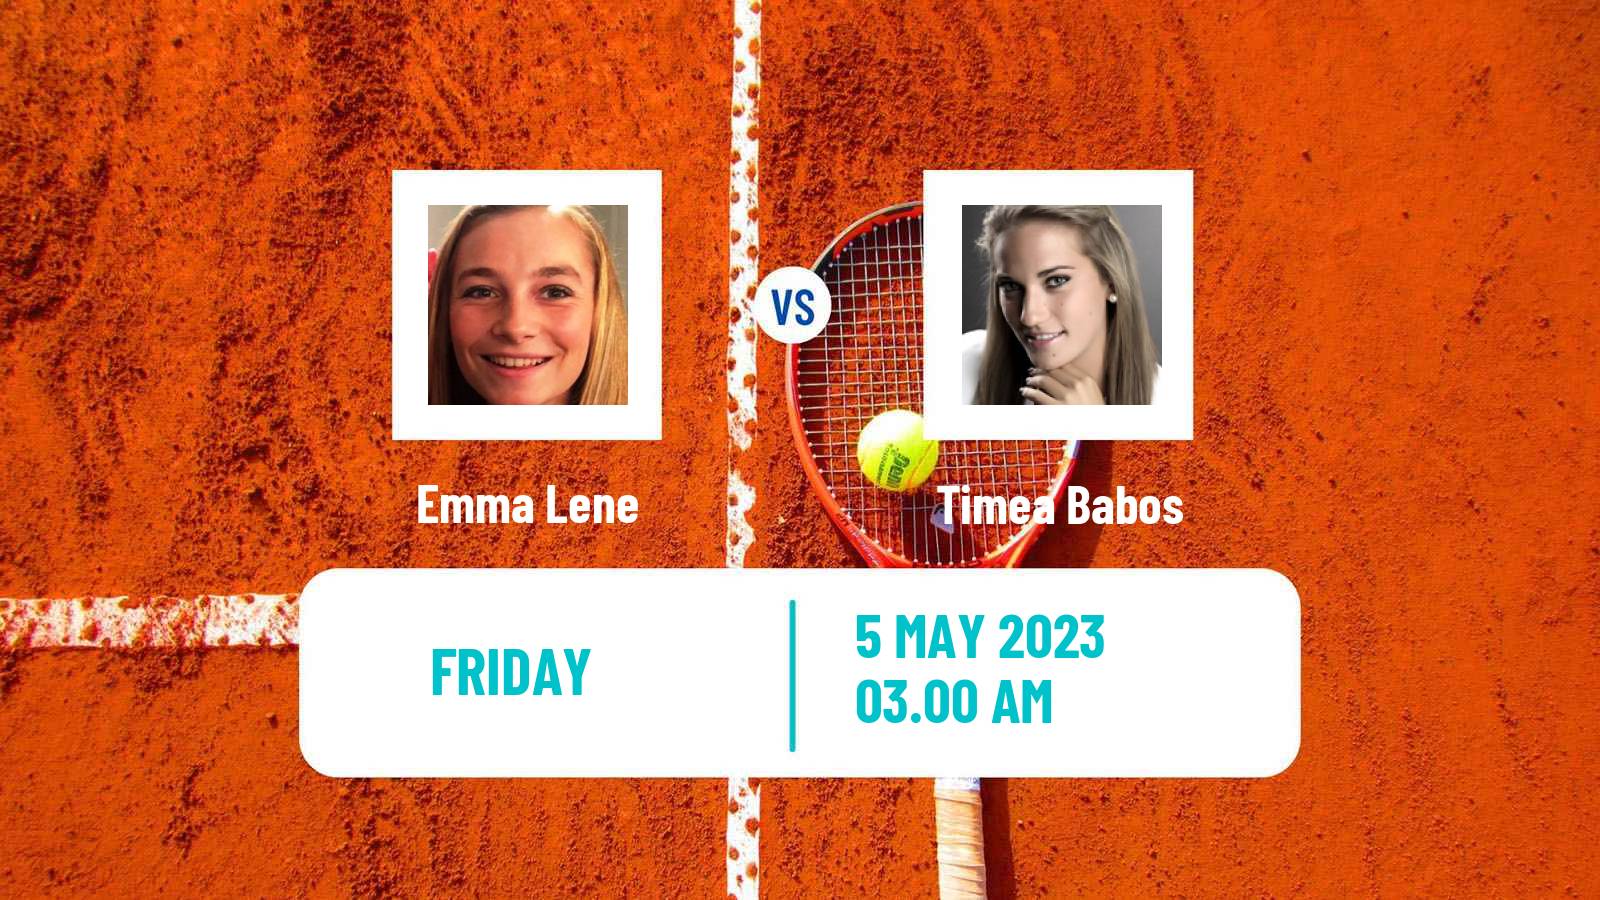 Tennis ITF Tournaments Emma Lene - Timea Babos